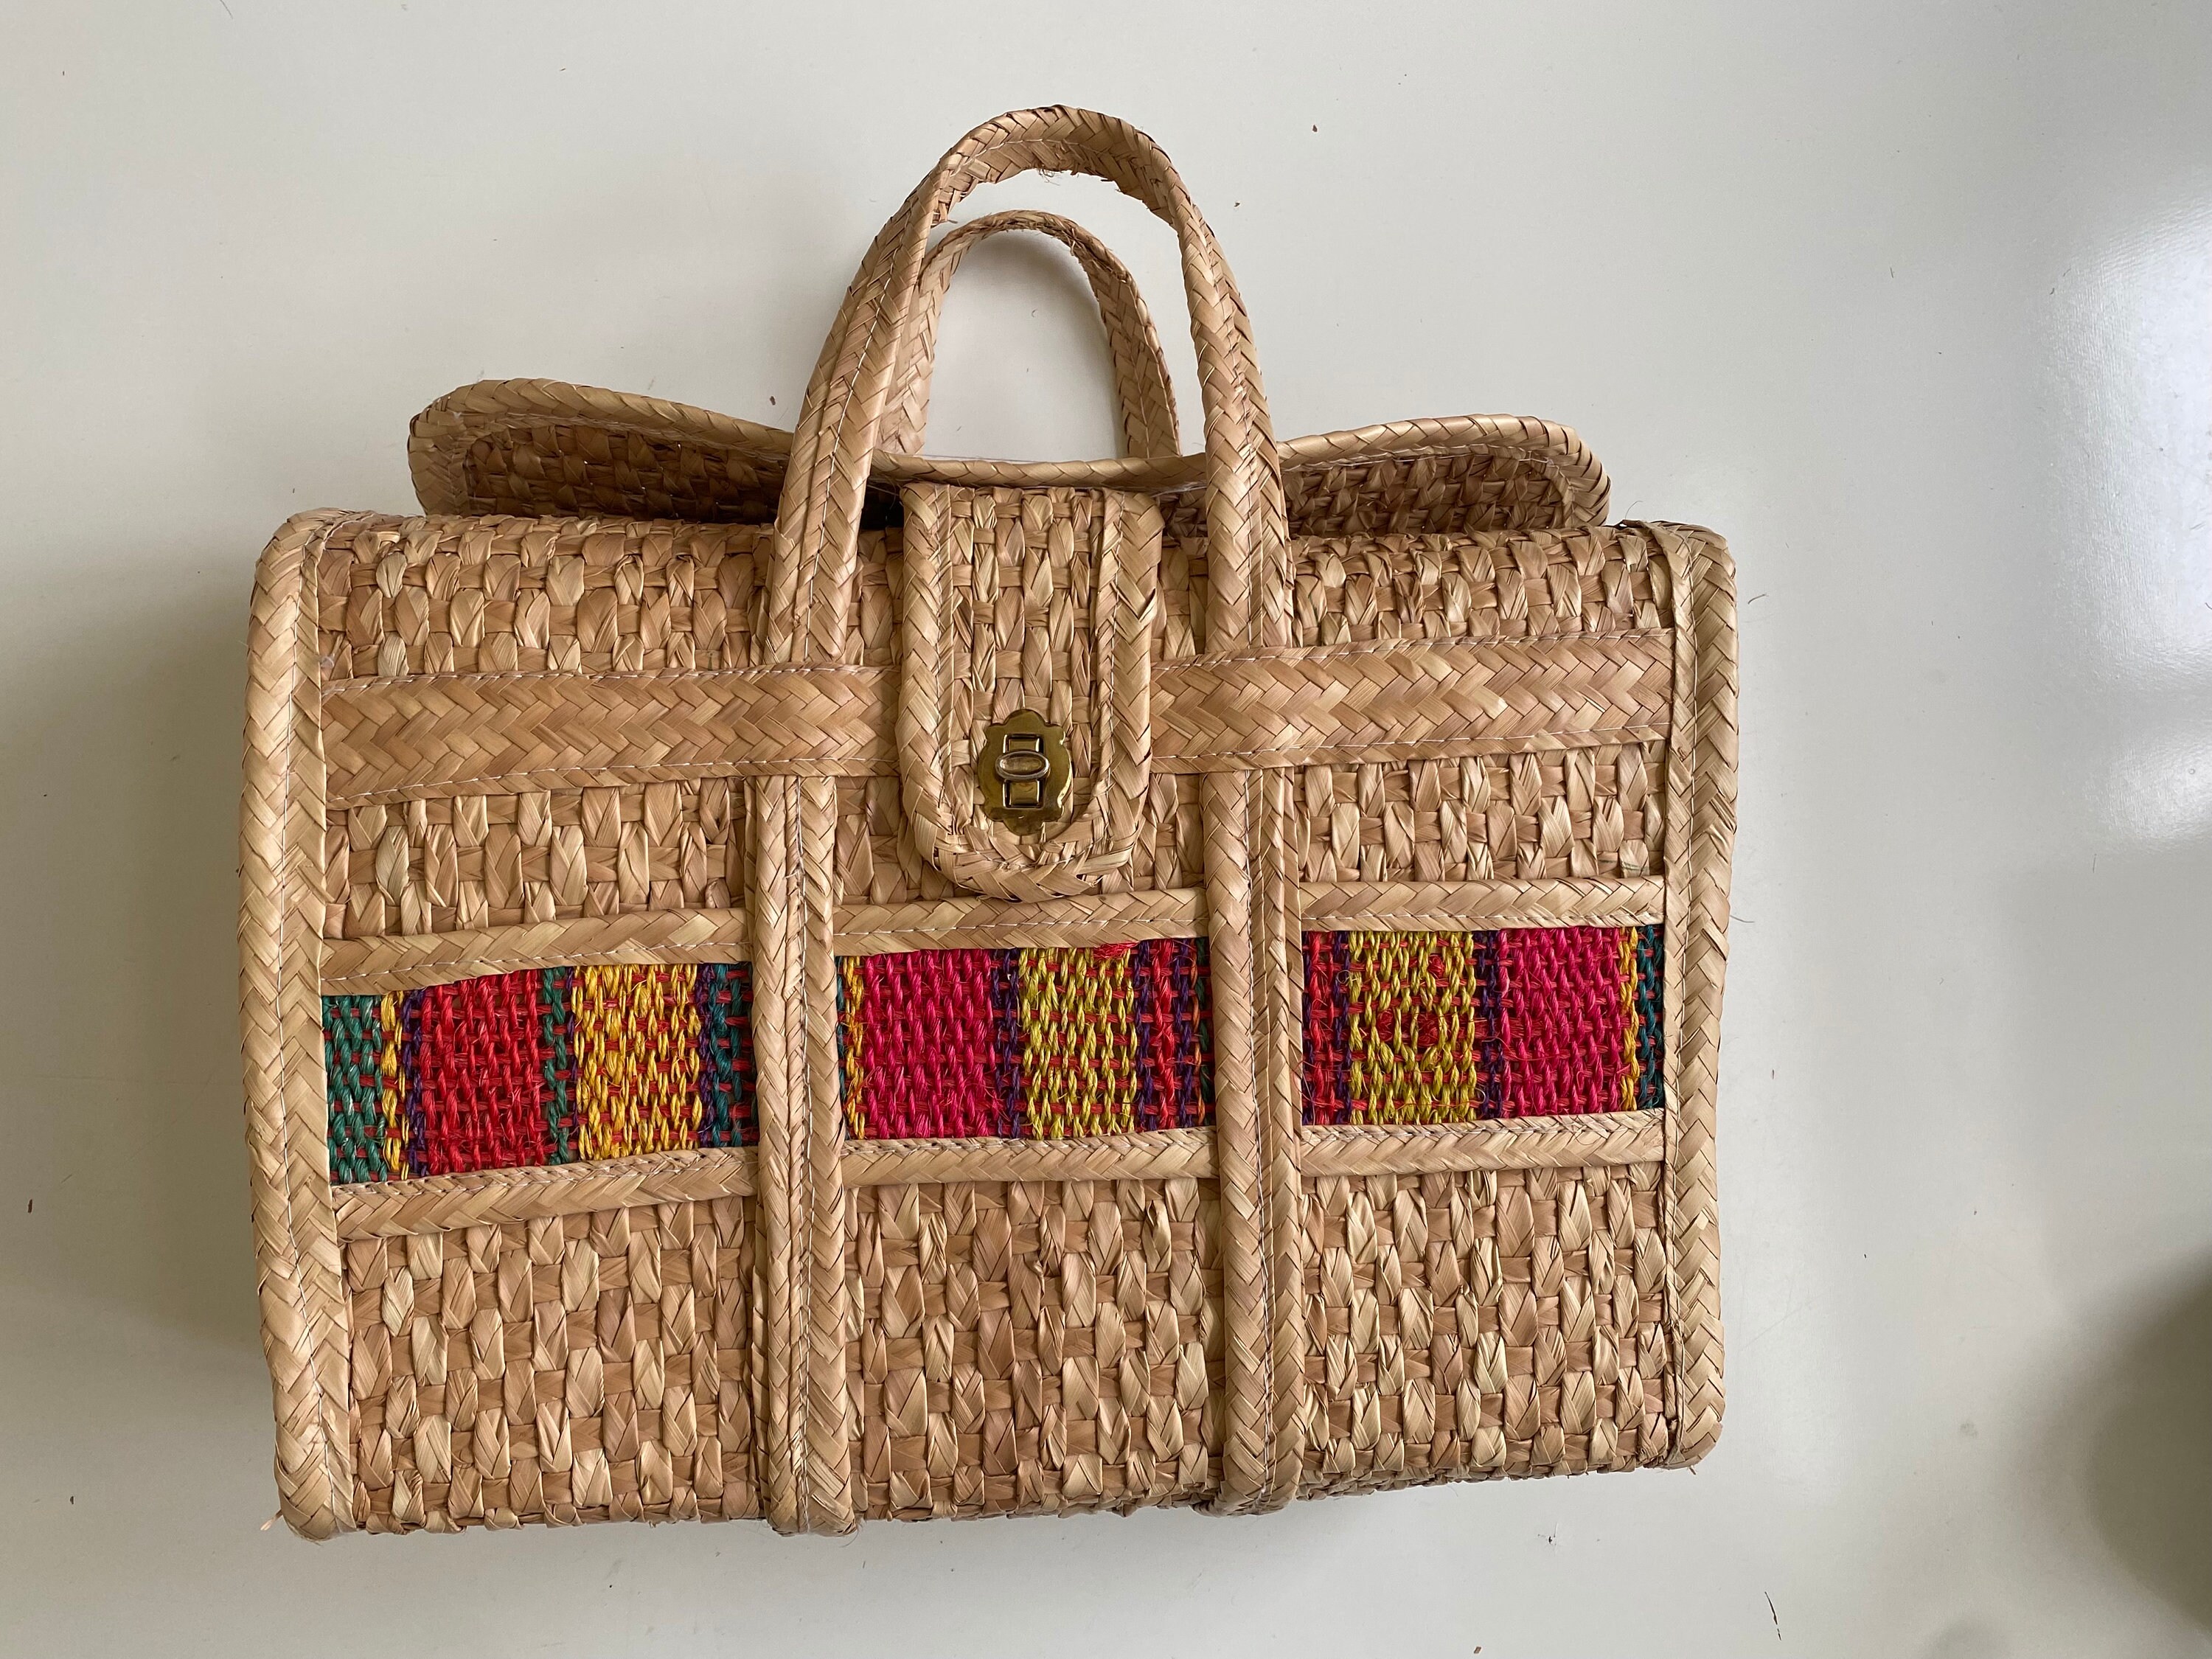 Straw Bag for Women Woven Beach Structured Tote Handmade Crochet Carteras  De Mujer Summer Shoulder Bohemian Hobo Pom Travel